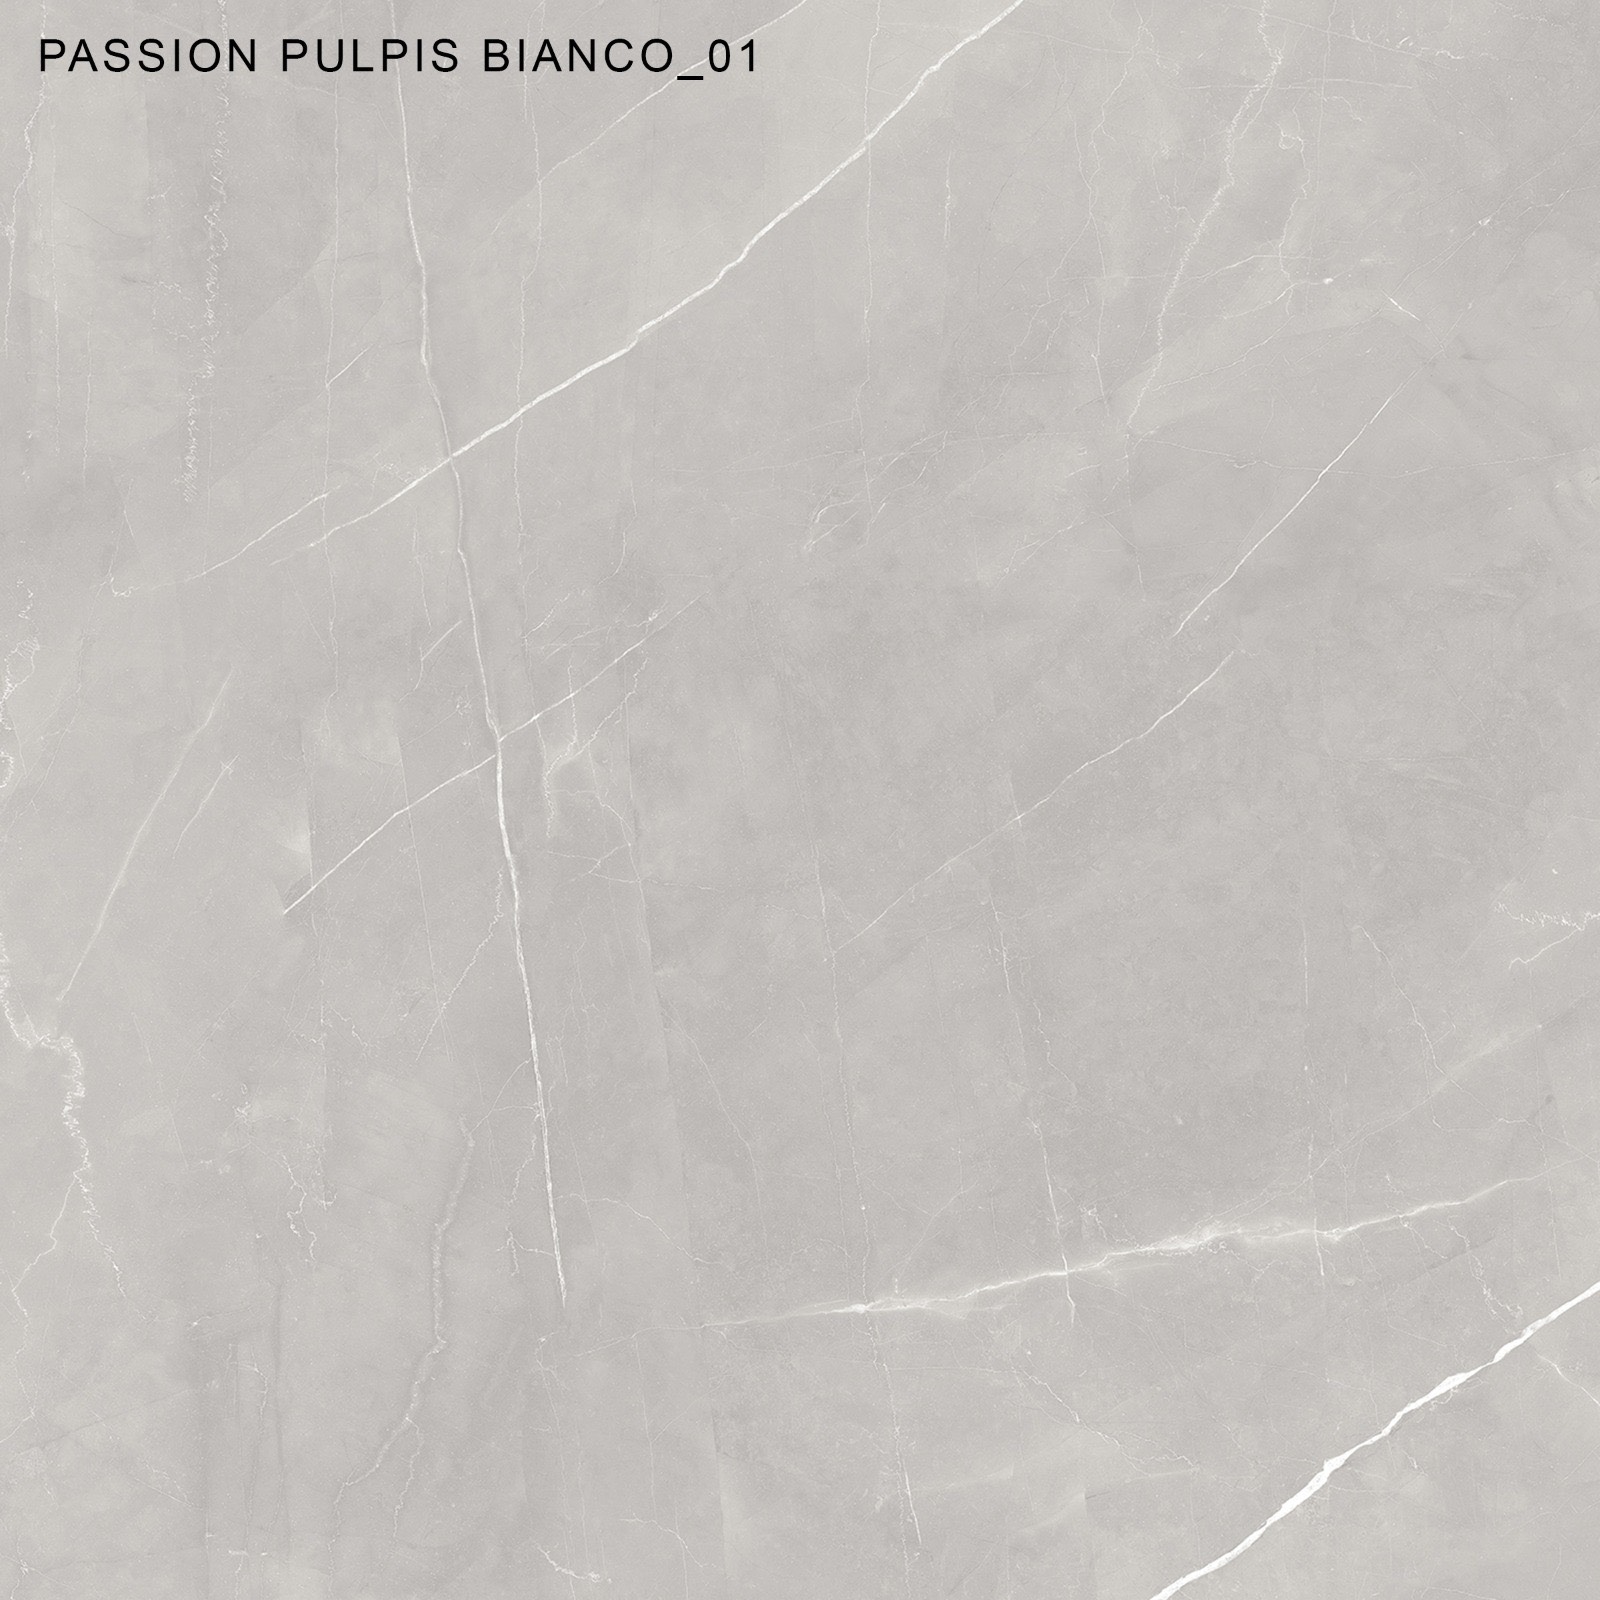 Passion Pulpis Bianco 1